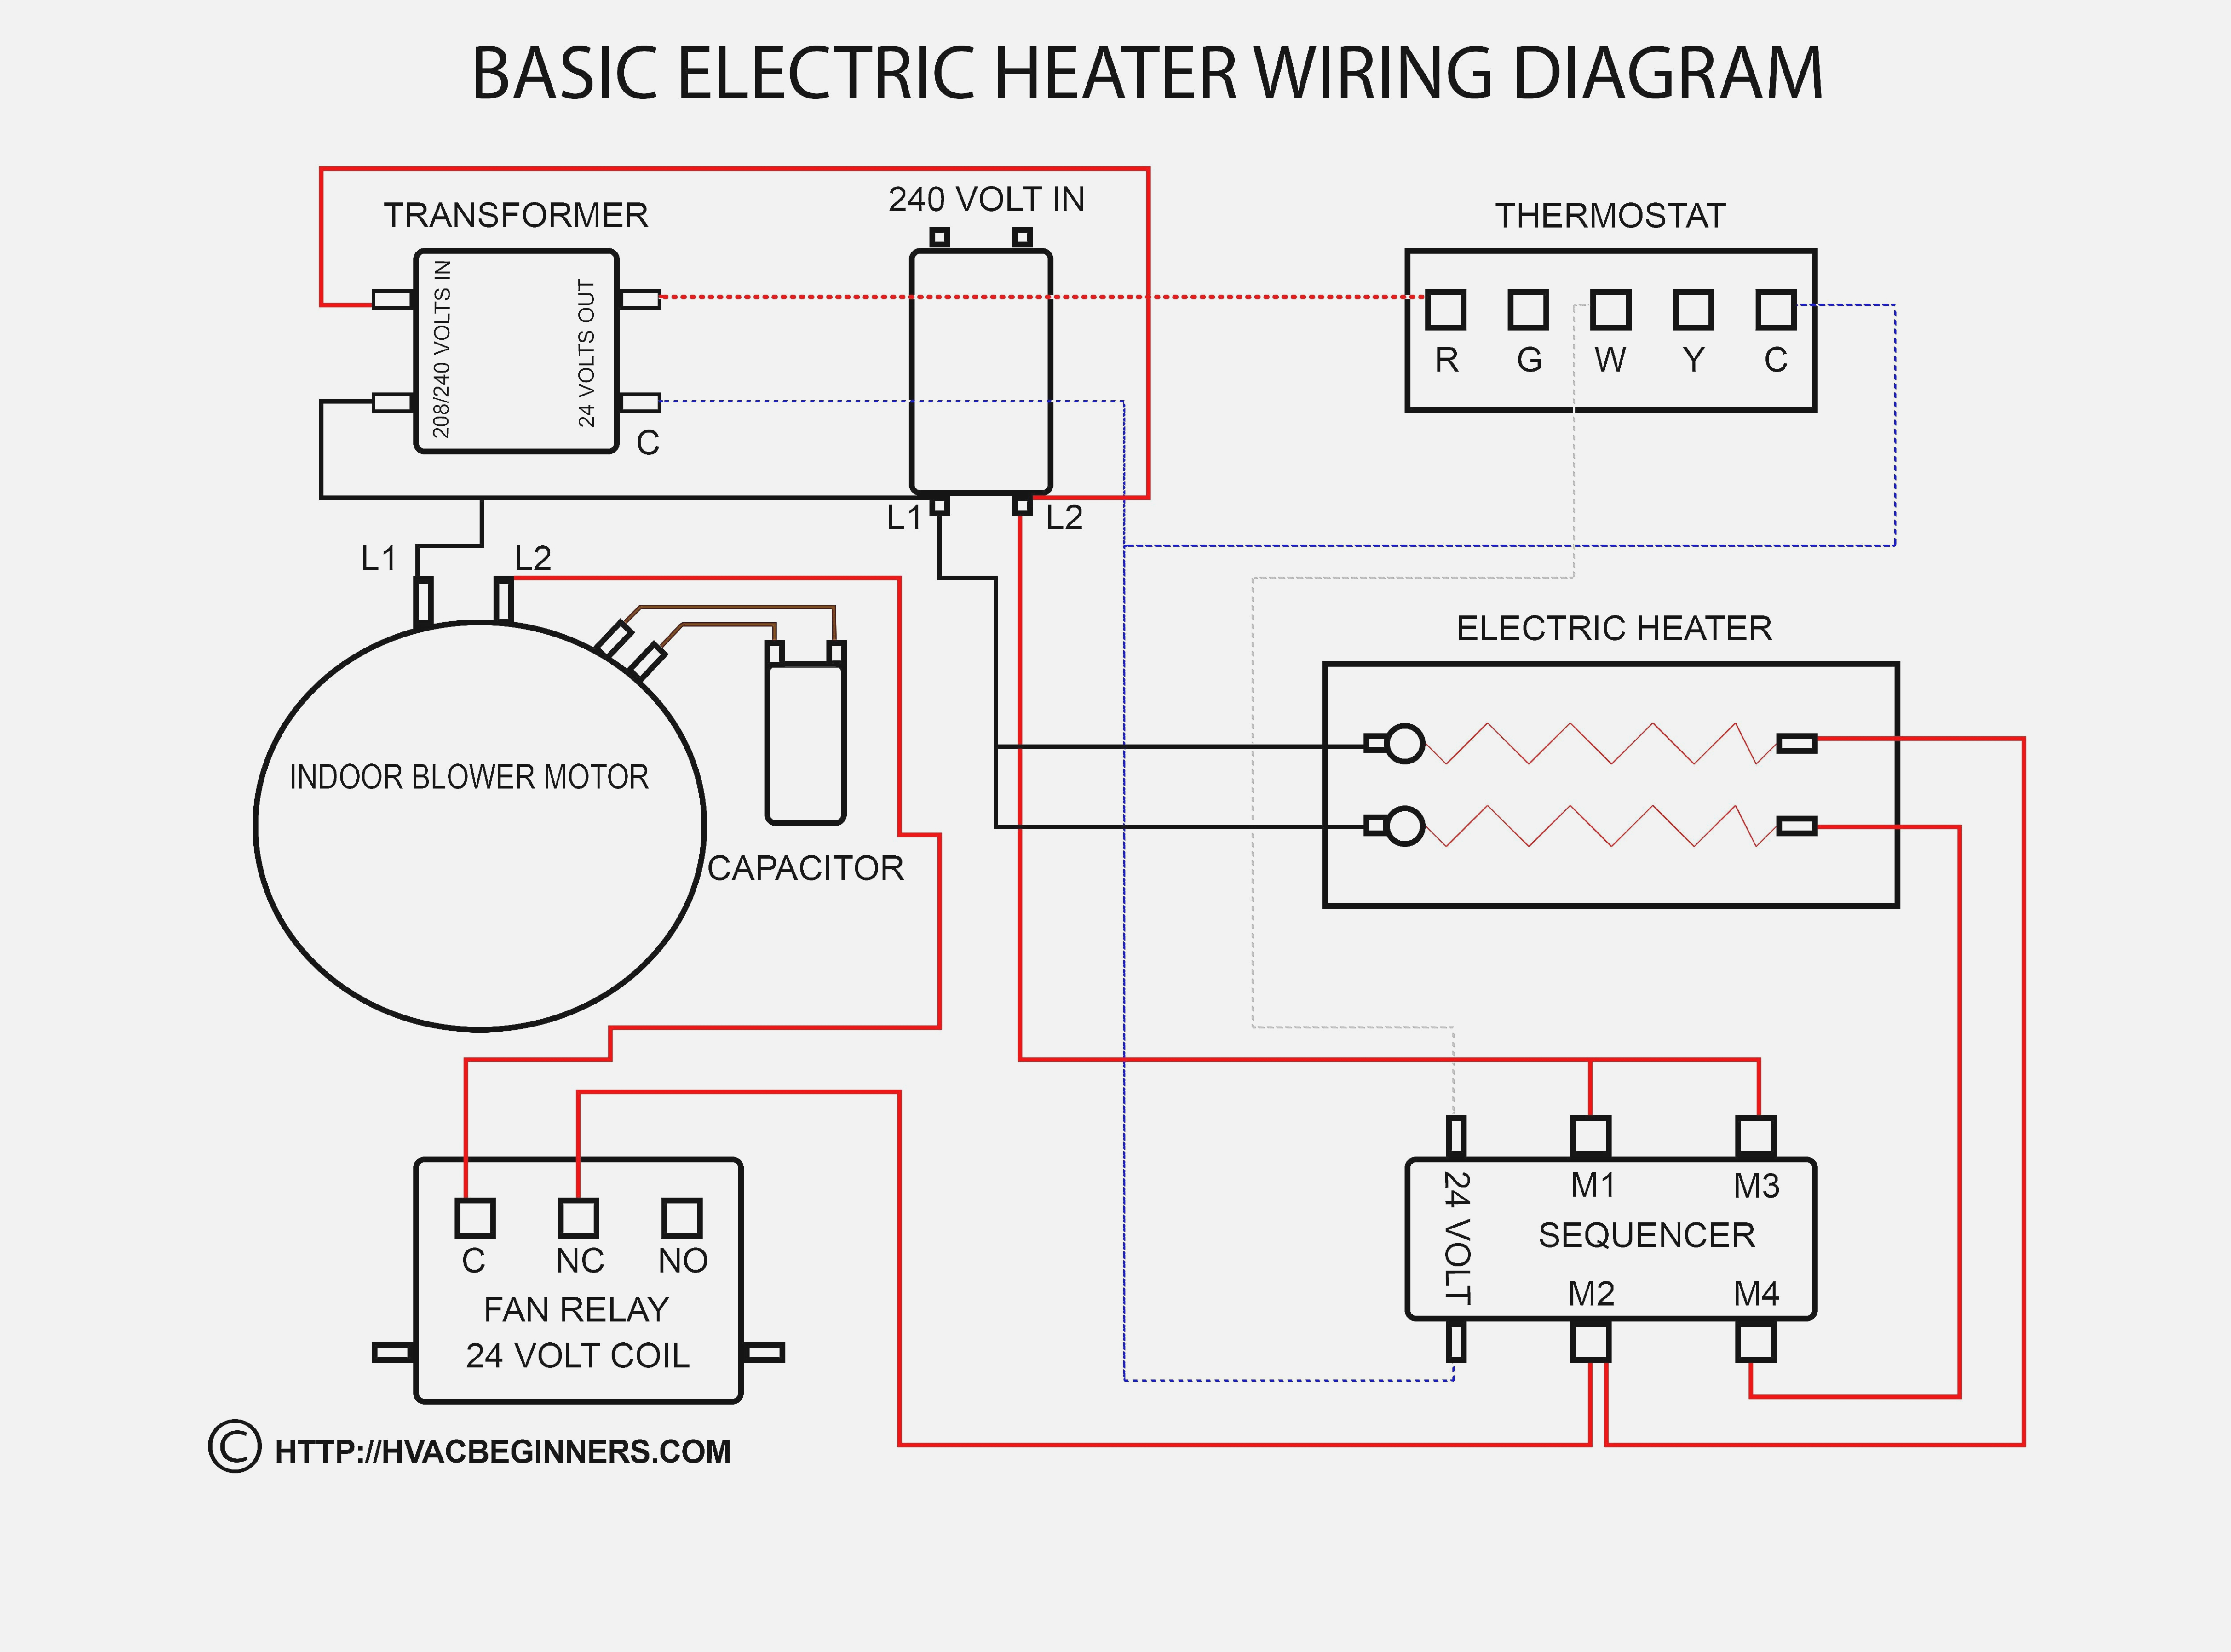 coal furnaces wiring for homes wiring diagram datasource coal furnace wiring wiring diagram new coal furnace